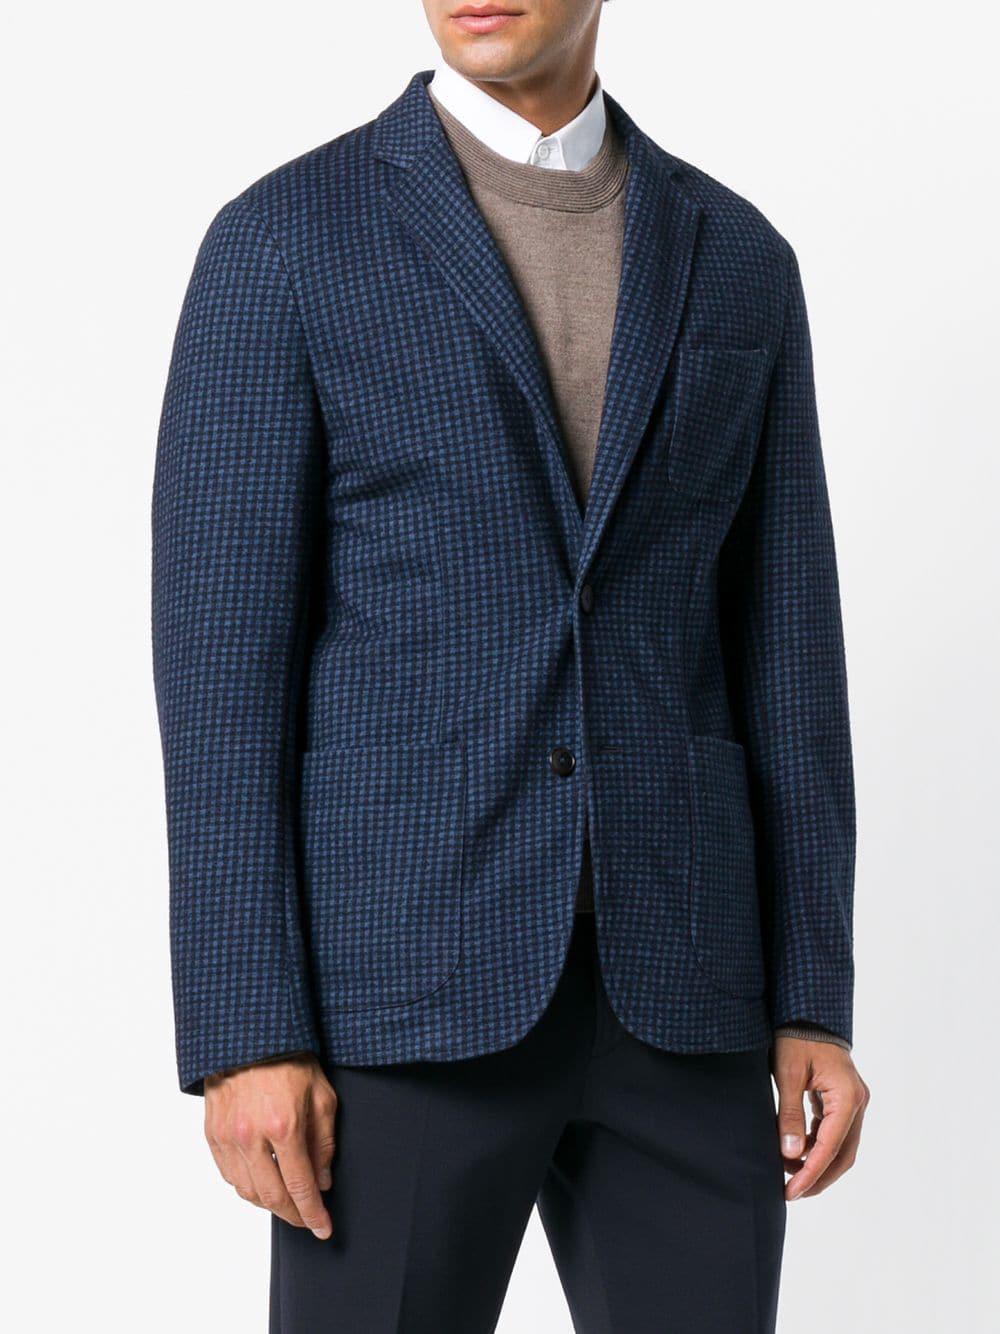 Z Zegna Wool Checked Blazer in Blue for Men - Lyst